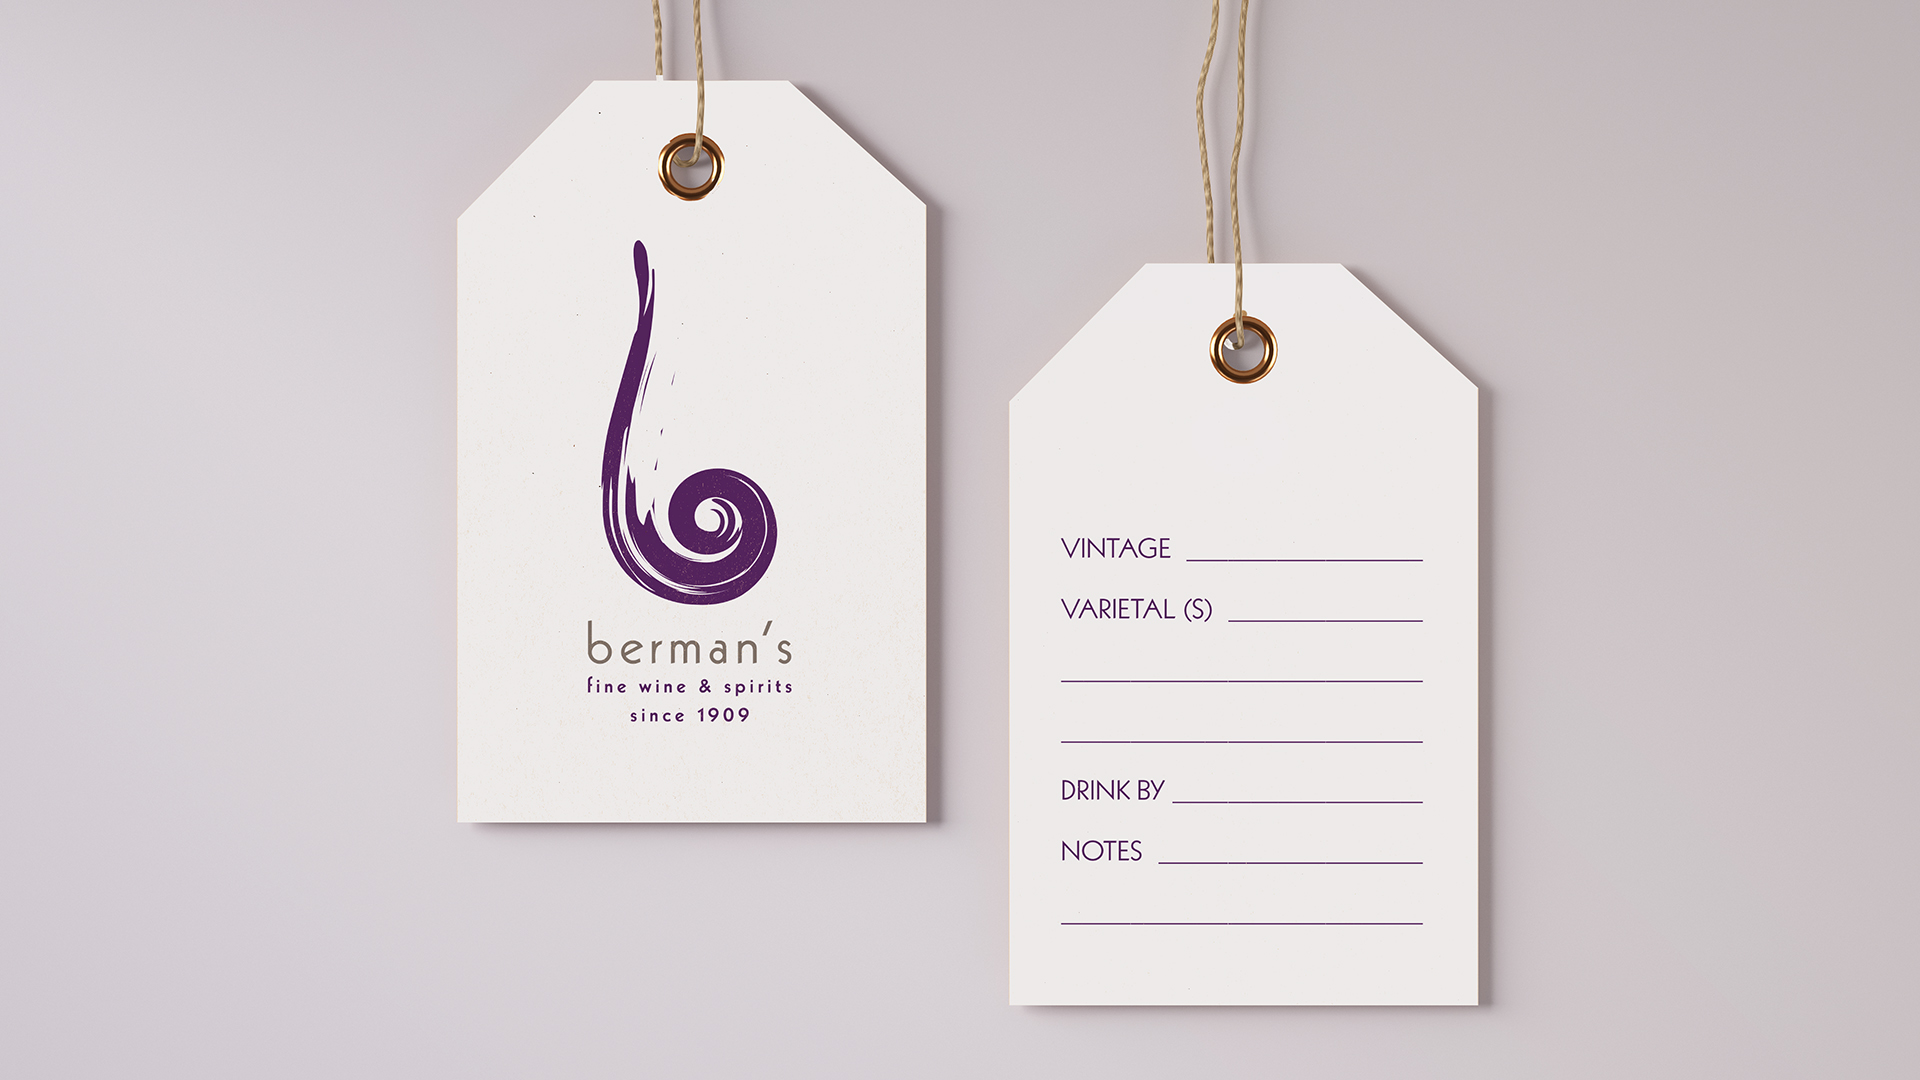 Bermans fine wine & spirits overview of wine bottle tags